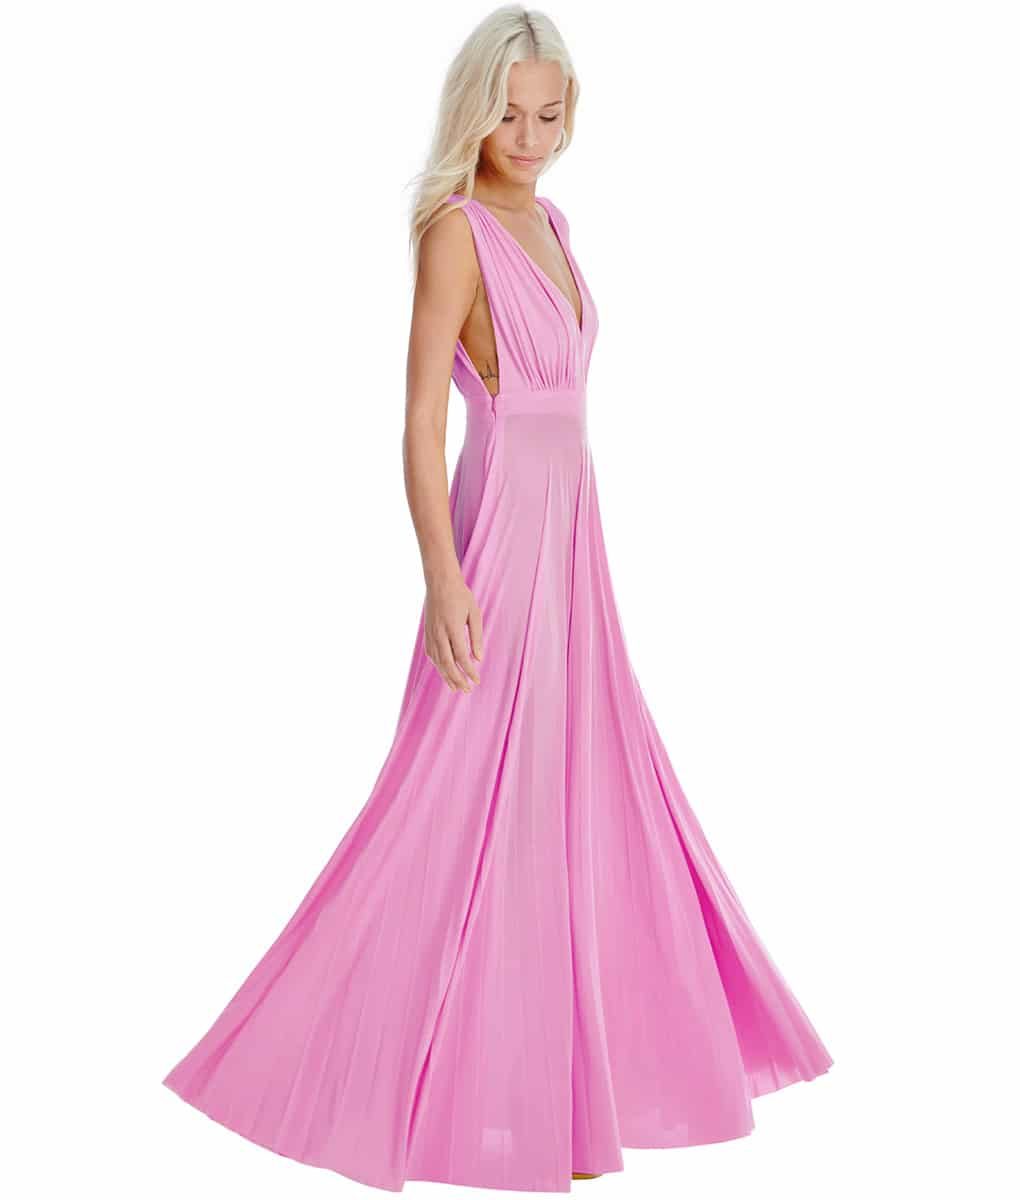 Buy Flowing Pink Dress In Stock